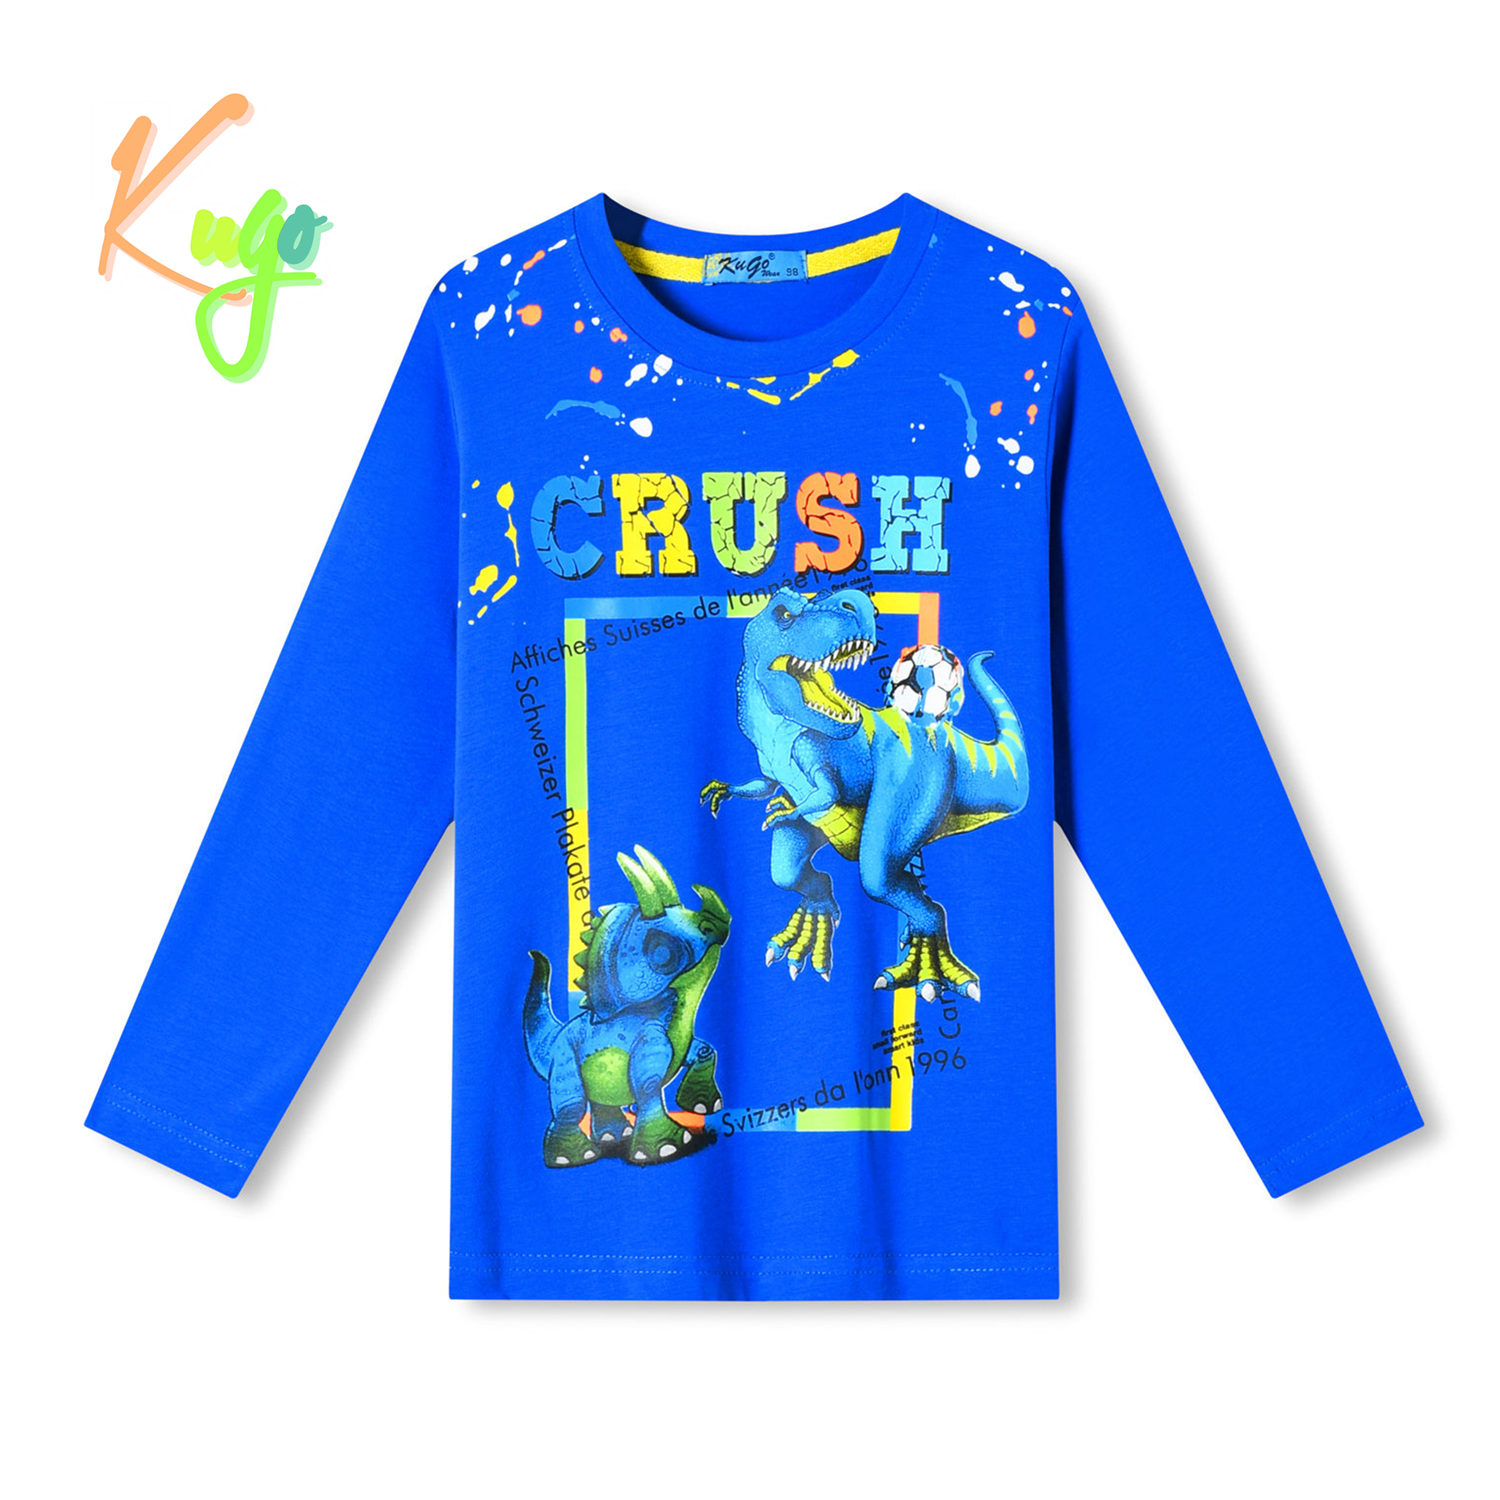 Chlapecké tričko - KUGO HC0755, modrá Barva: Modrá, Velikost: 110